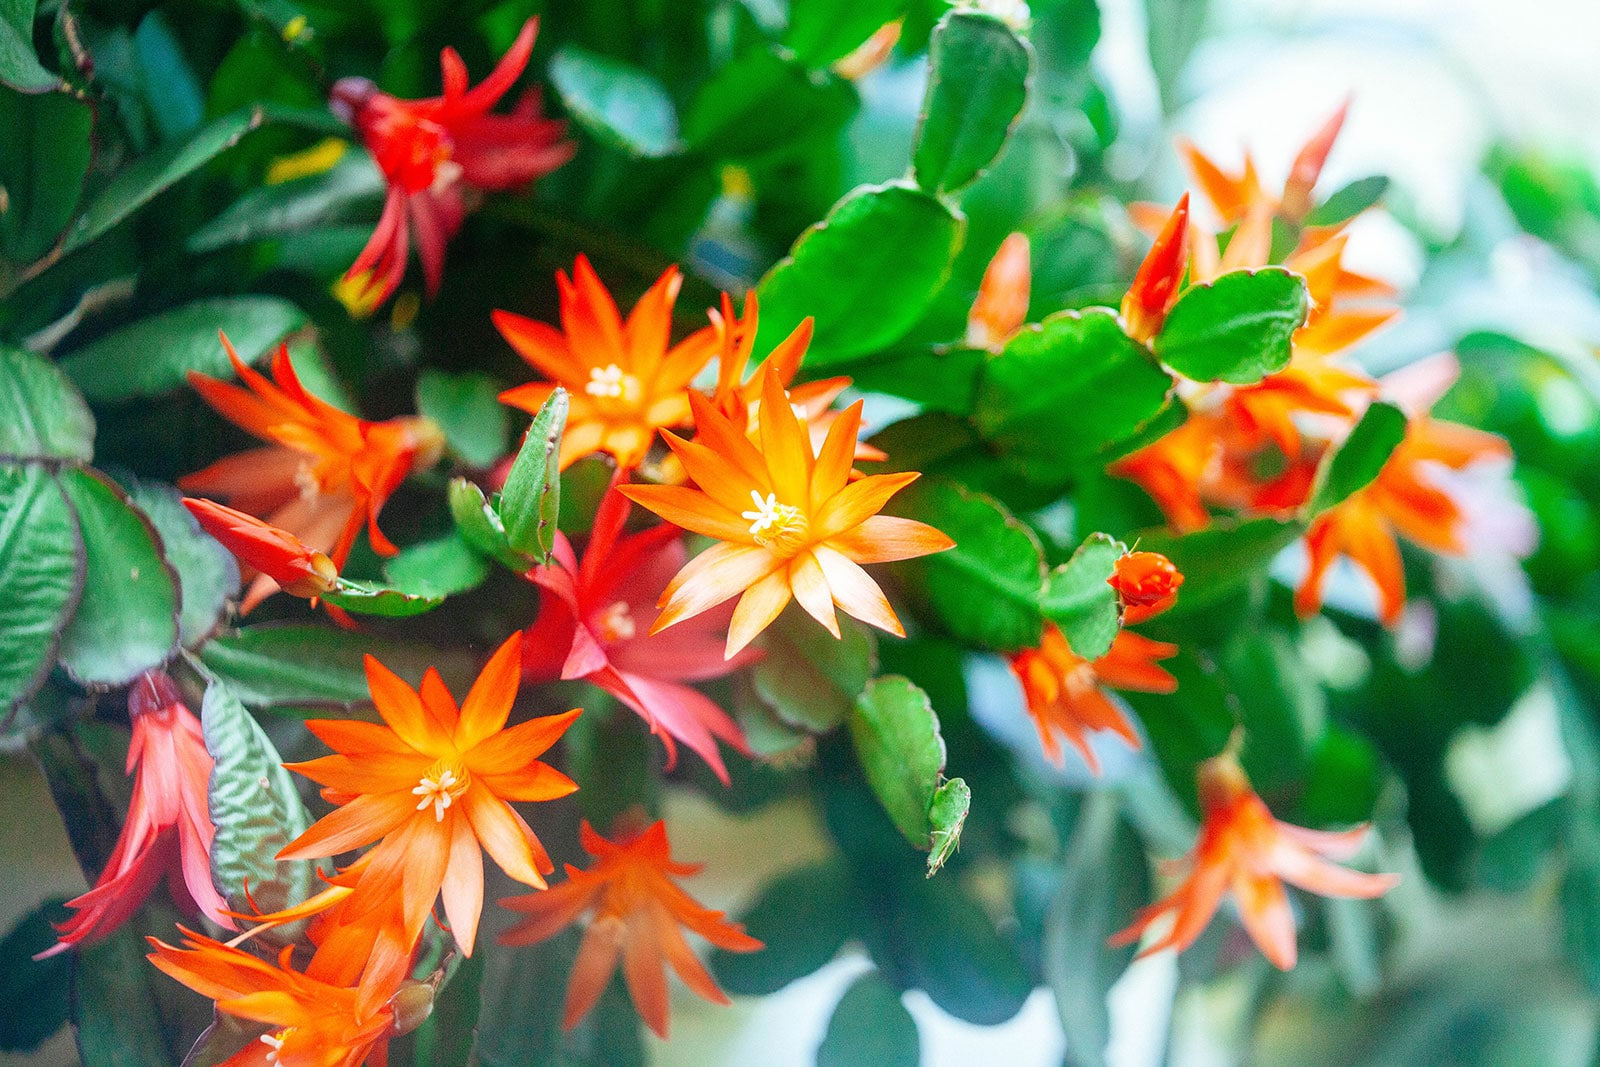 Christmas cactus in bloom with brilliant orange flowers